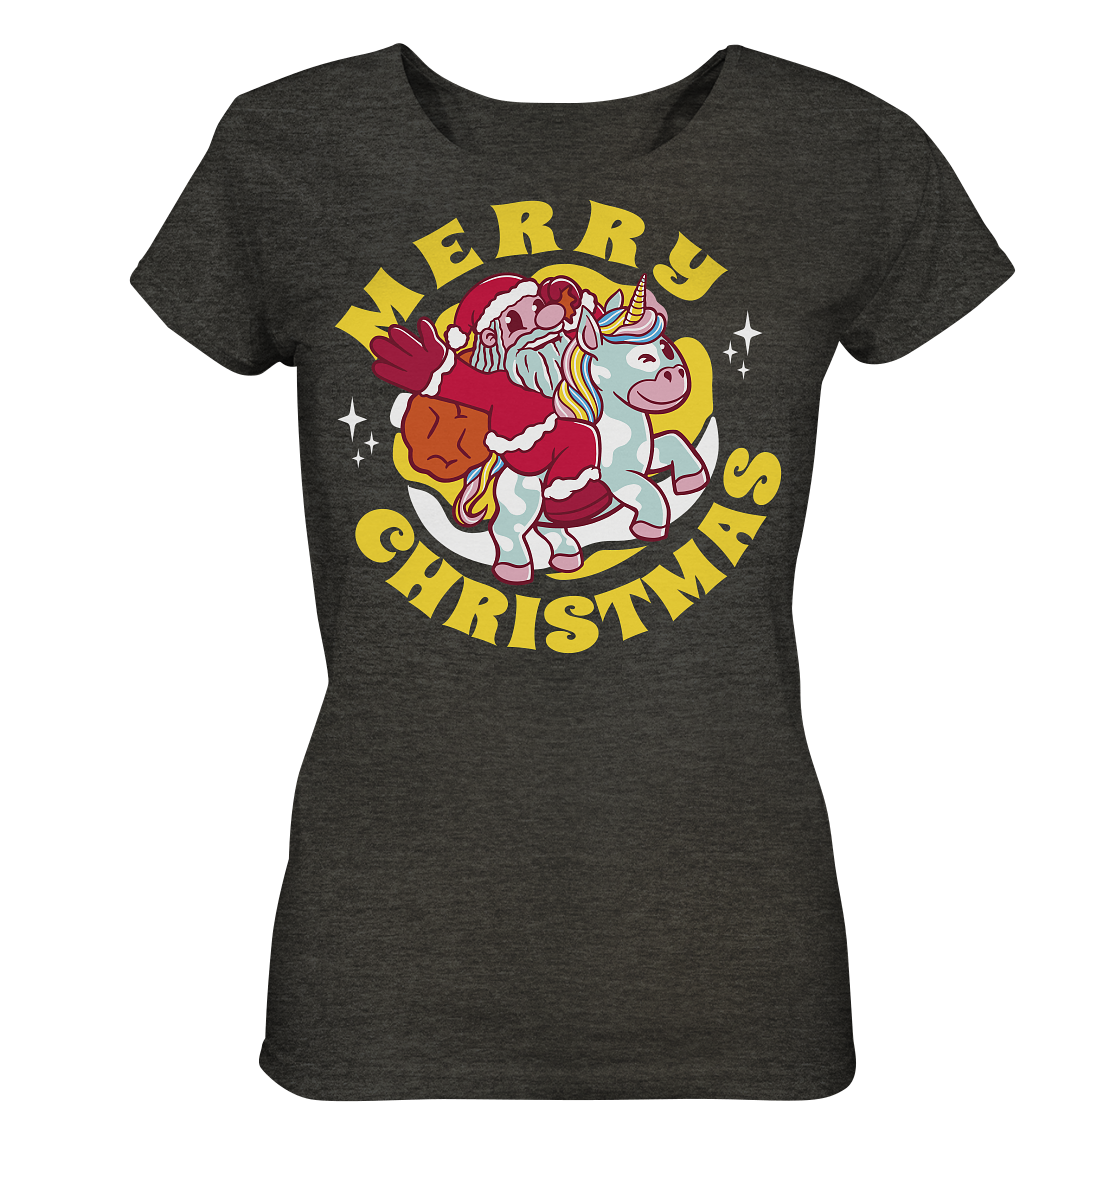 Reitender Nikolaus,Merry Christmas, Frohe Weihnachten  - Ladies Organic Shirt (meliert)